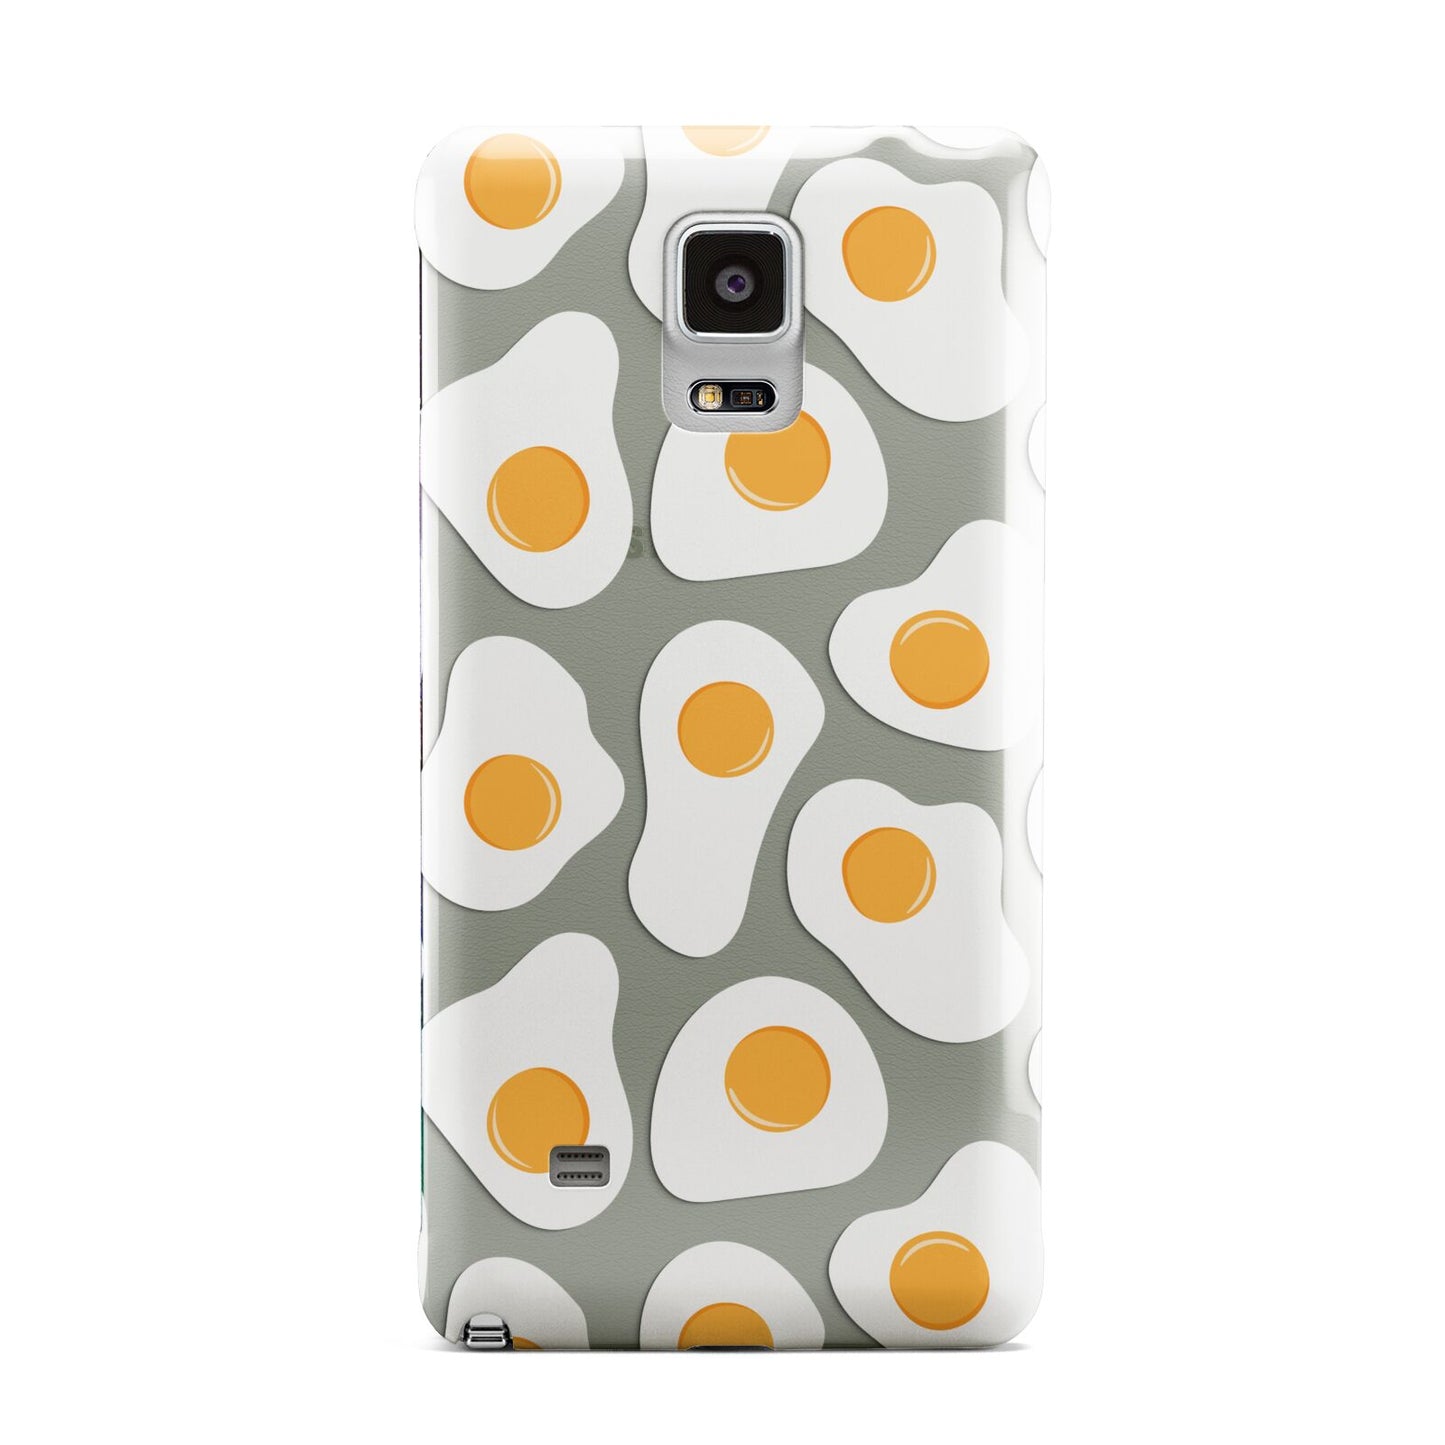 Fried Egg Samsung Galaxy Note 4 Case